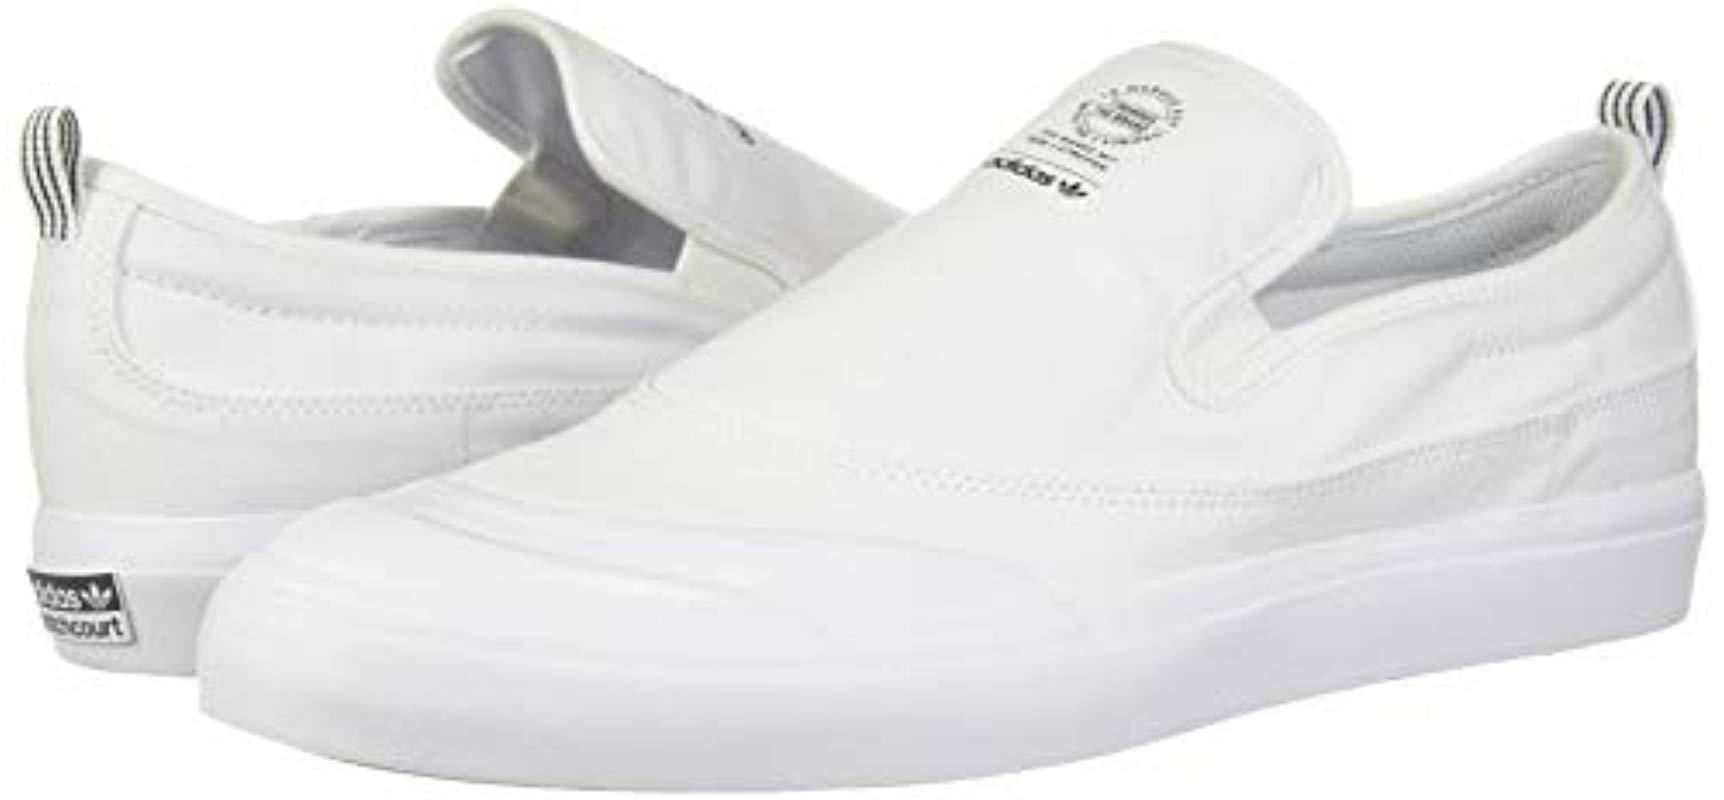 adidas Canvas Matchcourt Slip Running Shoe in White/White/White (White ...